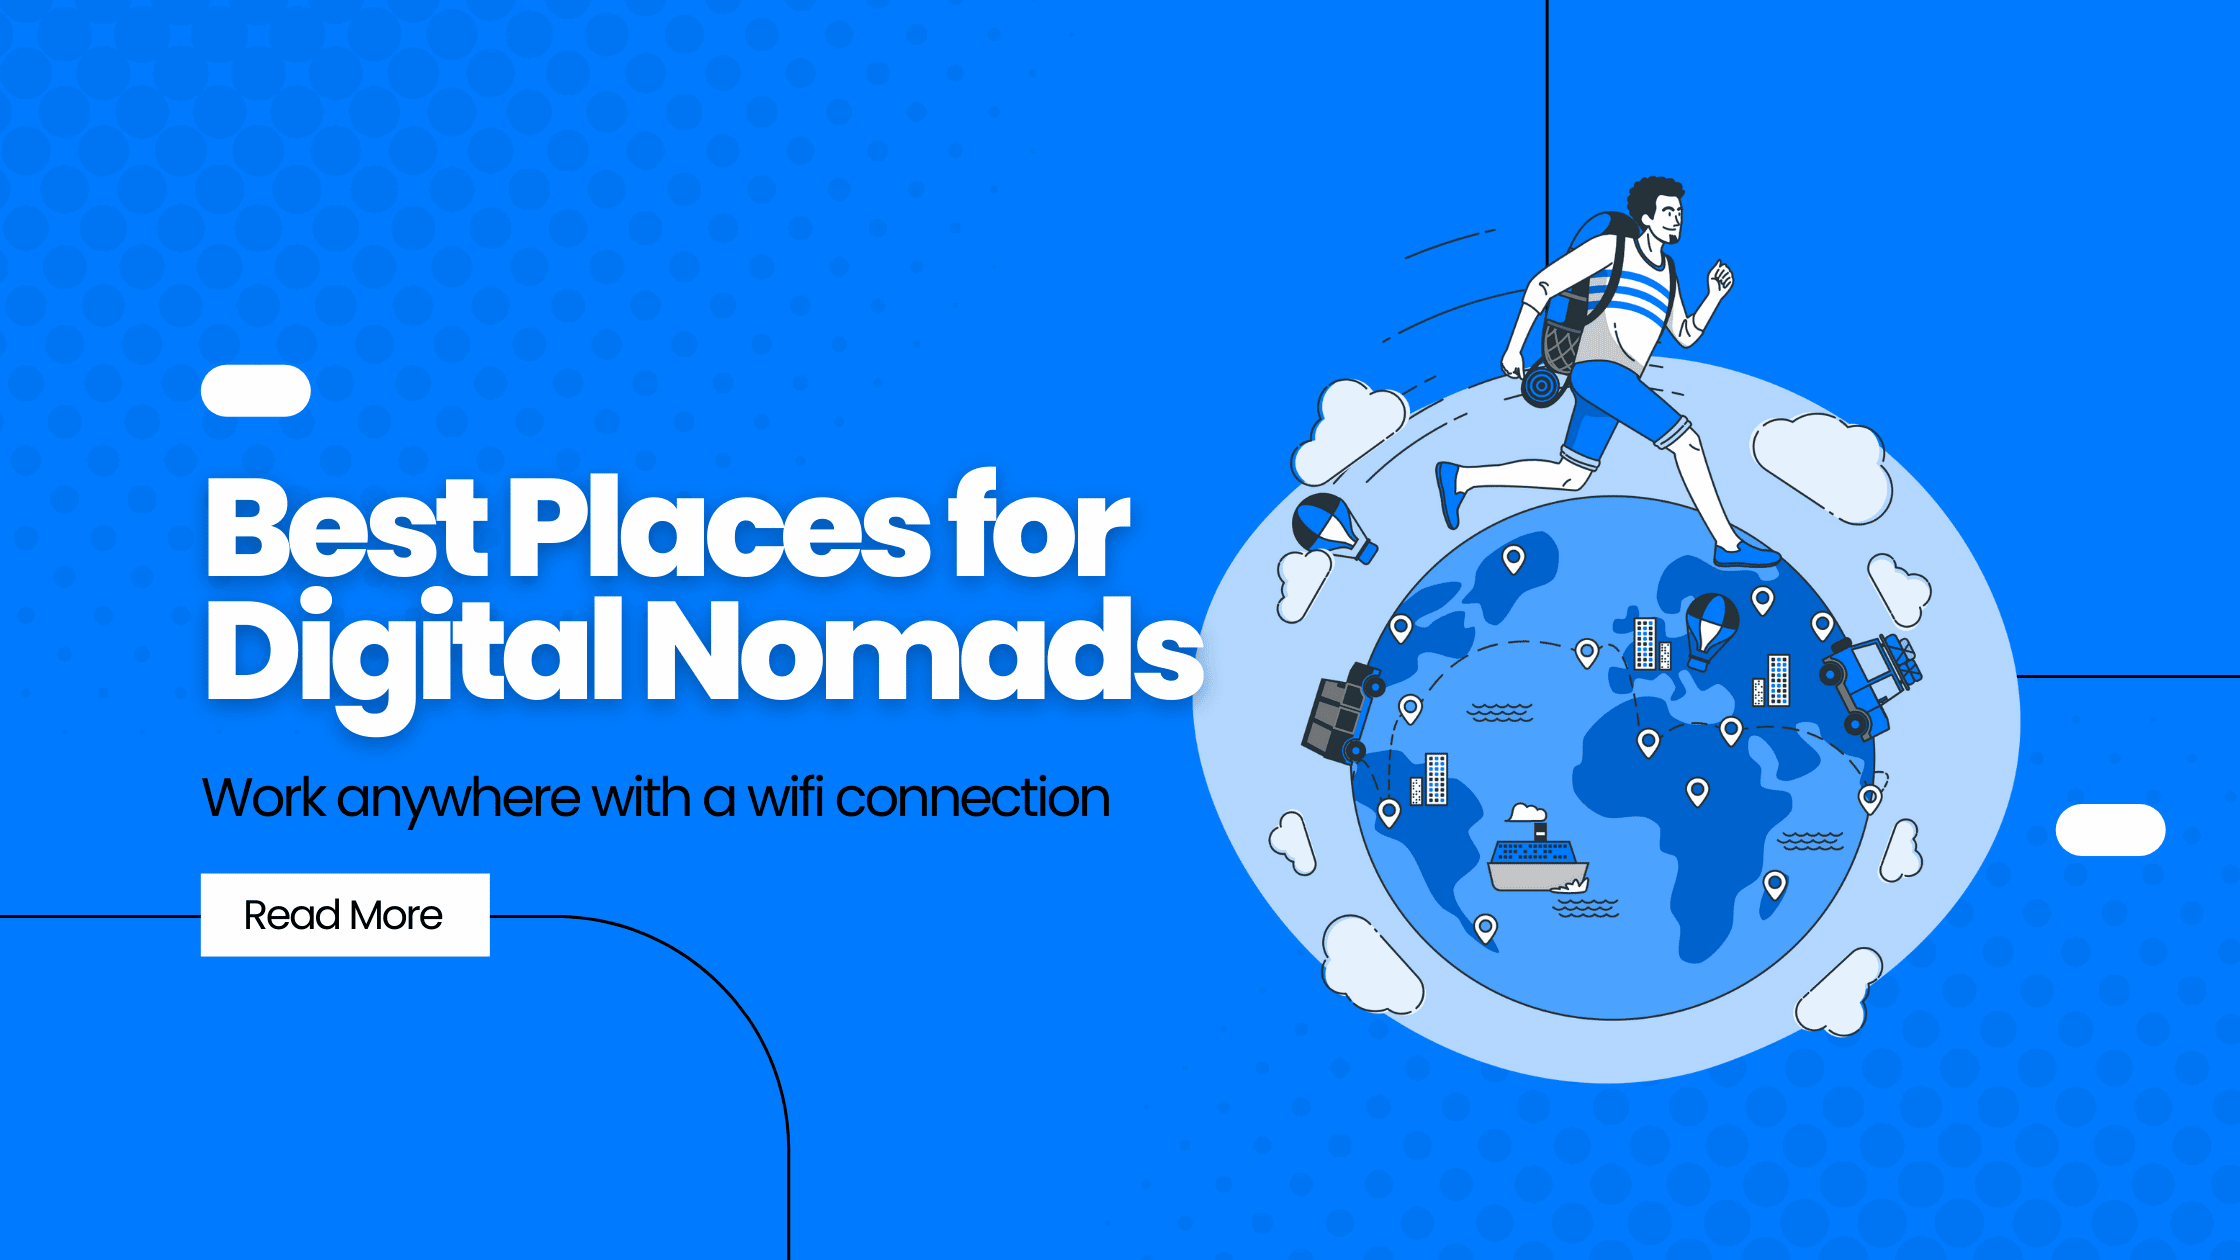 Best Places for Digital Nomads